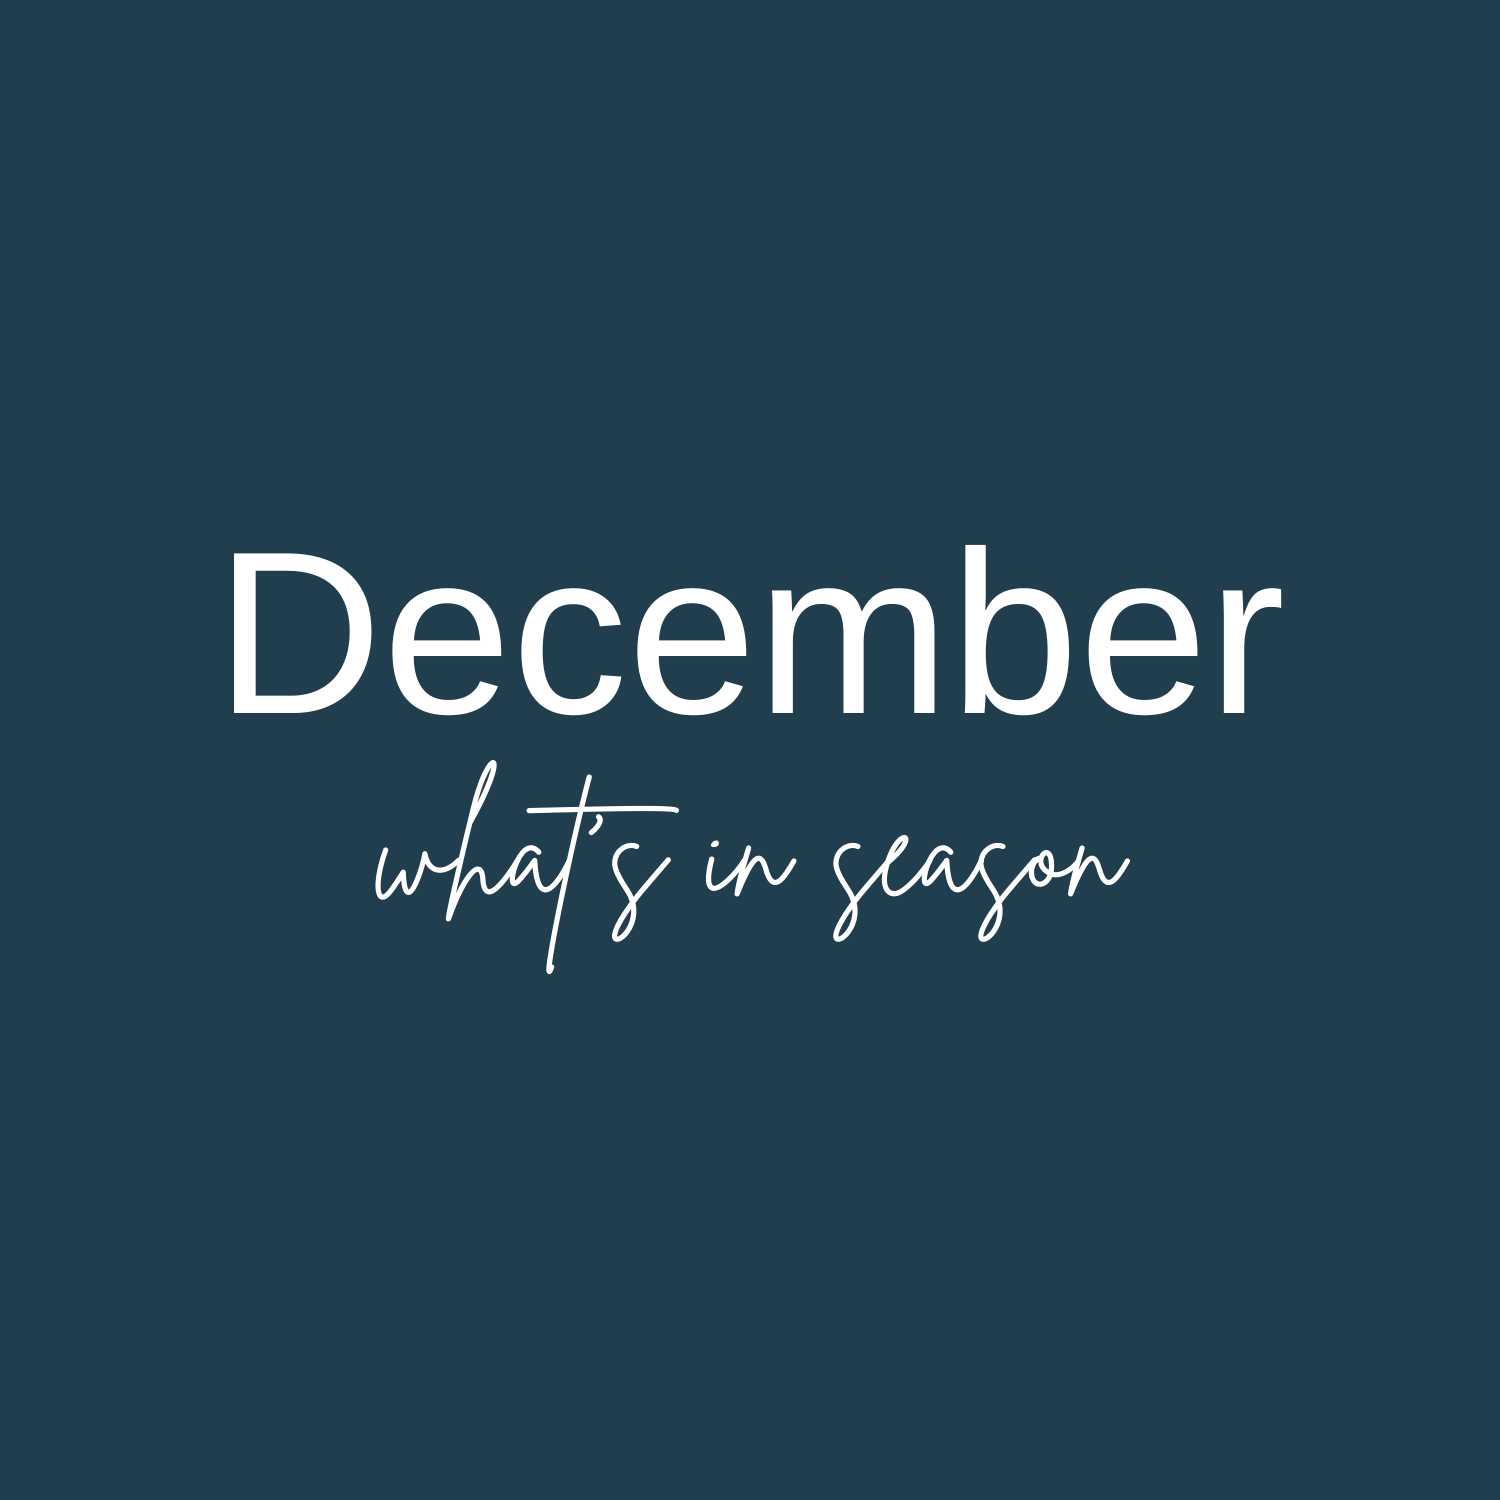 -What’s in Season in December?